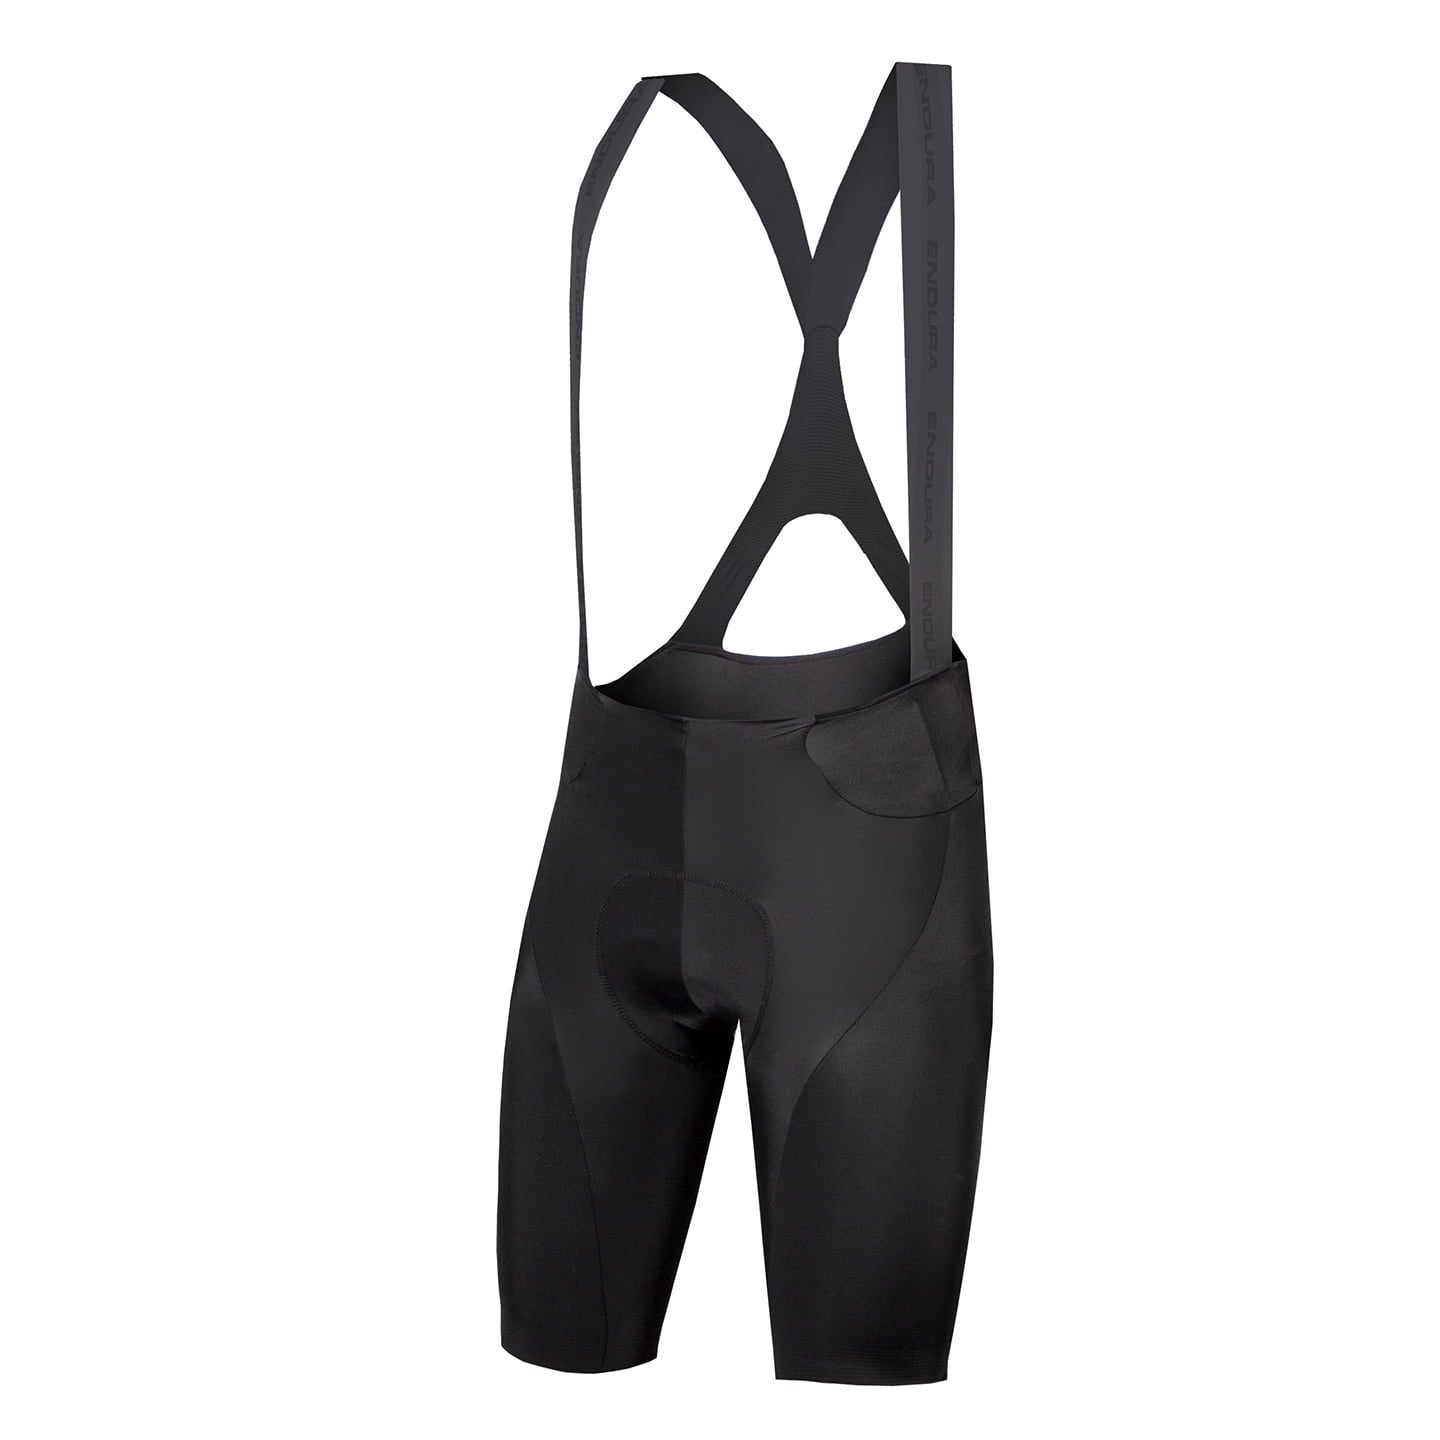 ENDURA Pro SL EGM Bib Shorts Bib Shorts, for men, size L, Cycle shorts, Cycling clothing